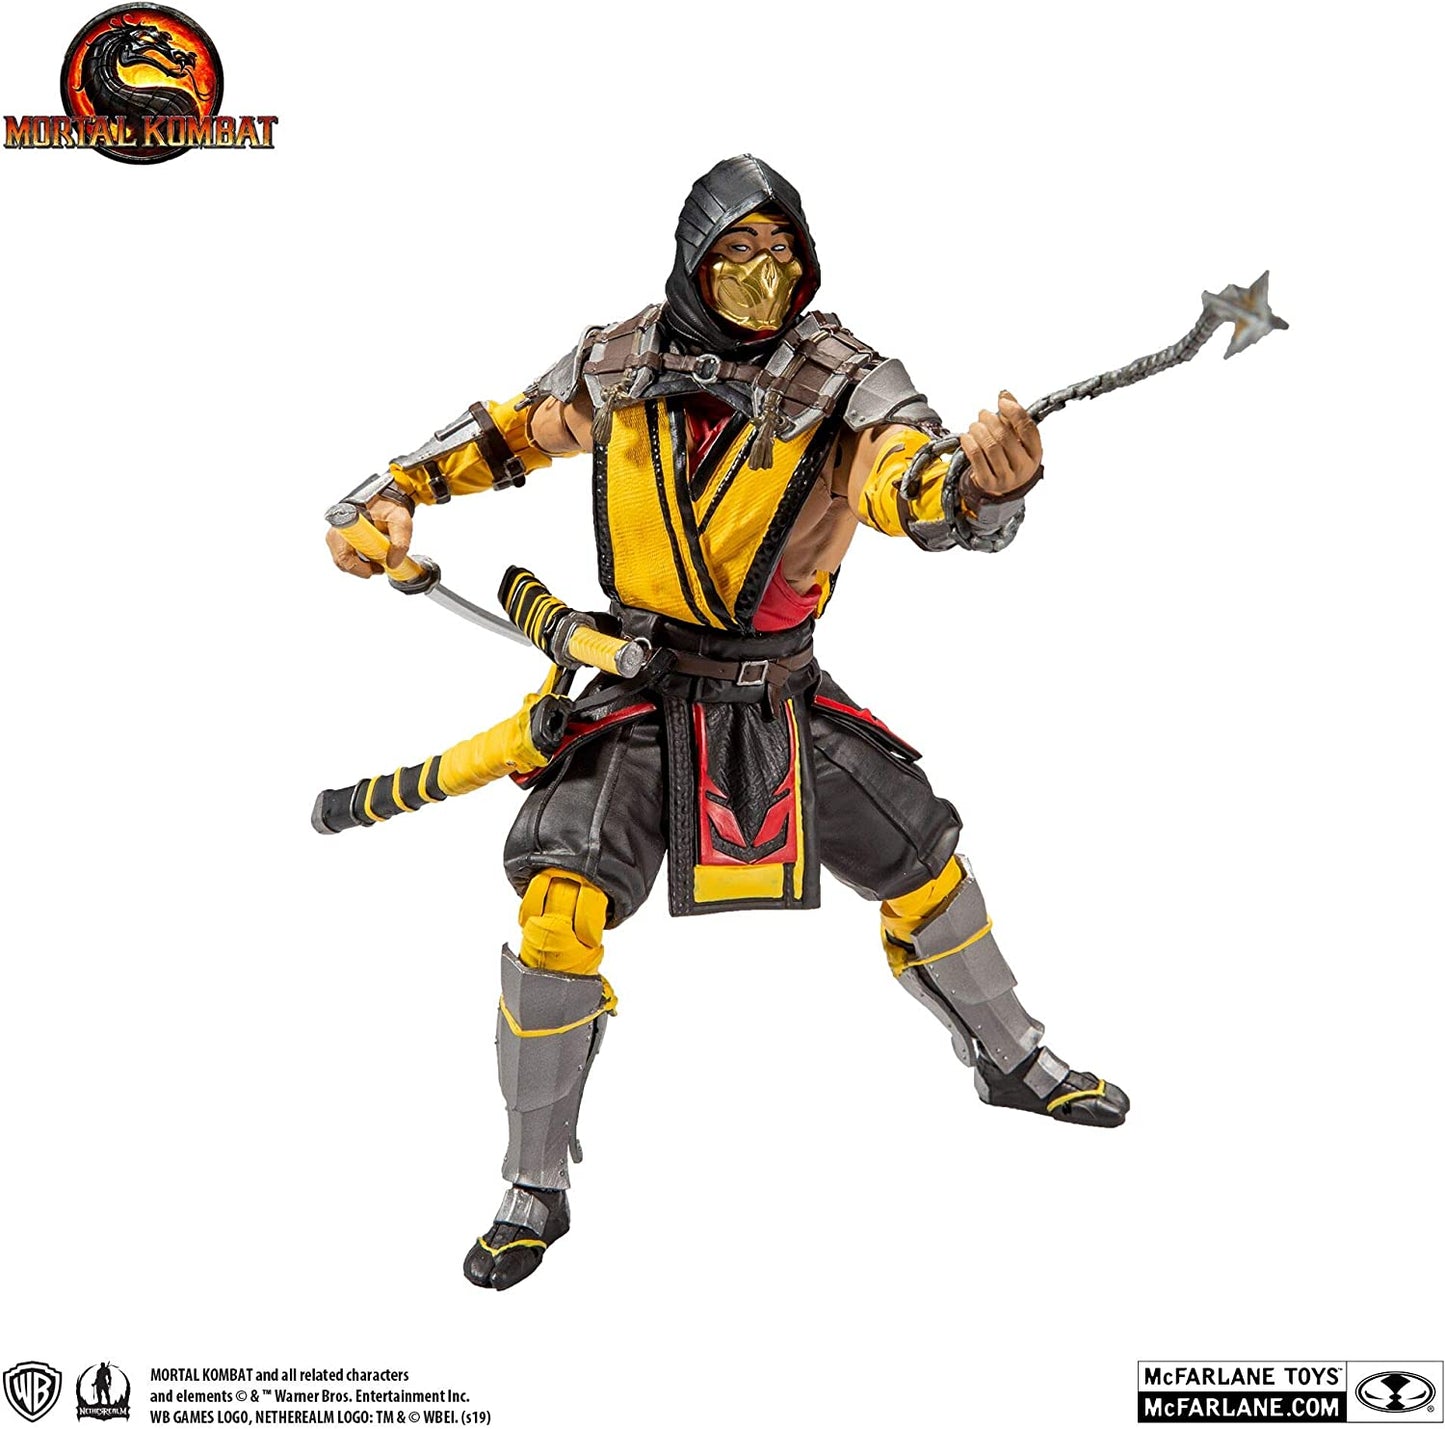 Mortal Kombat - Scorpion 7 Inch Action Figure Toy